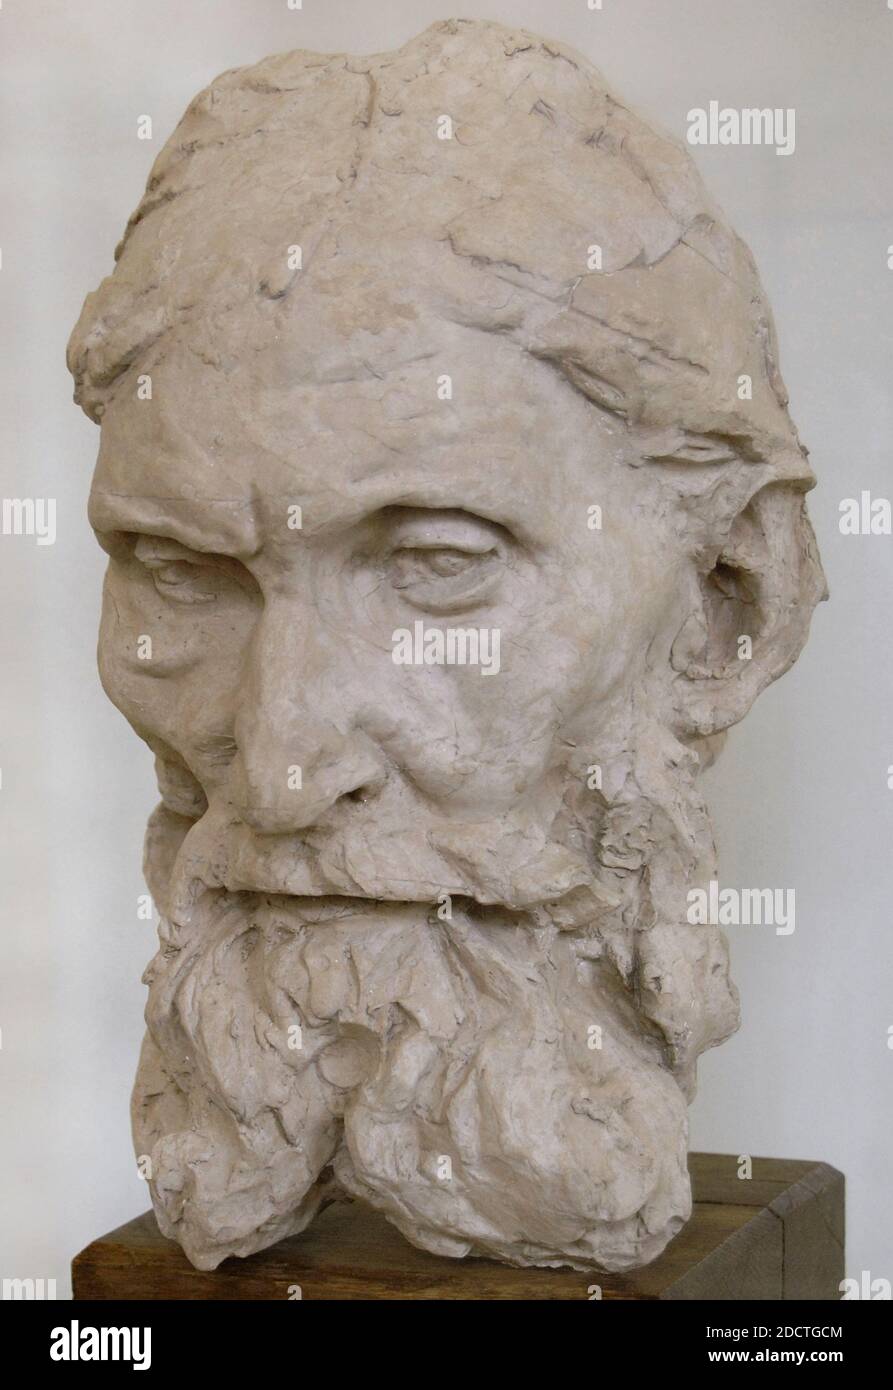 Auguste Rodin (1840-1917). Scultore francese. Burgher di Calais, Eustache de Saint-Pierre, tipo A. testa, 1886. Terracotta. Museo Rodin. Parigi. Francia. Foto Stock